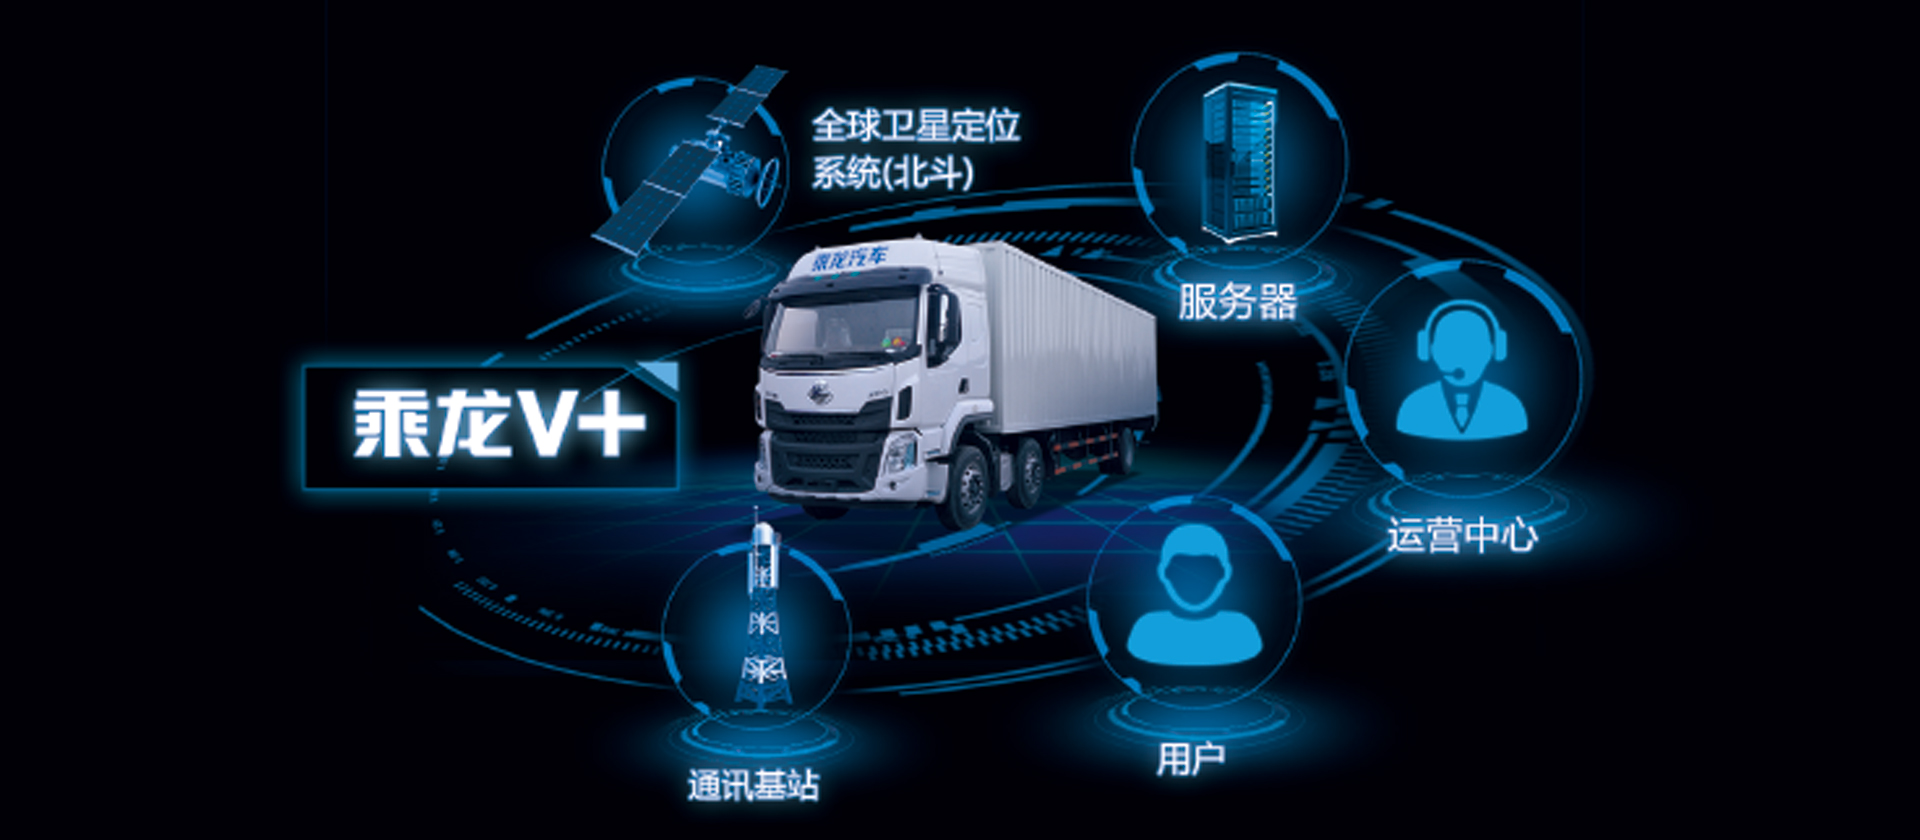 H5牽引車 全新開發乘龍V+車聯網系統，智能卡車，十大功能幫助改善駕駛行為50%，降低車輛7%-10%油耗，提升20%出勤率和配貨率